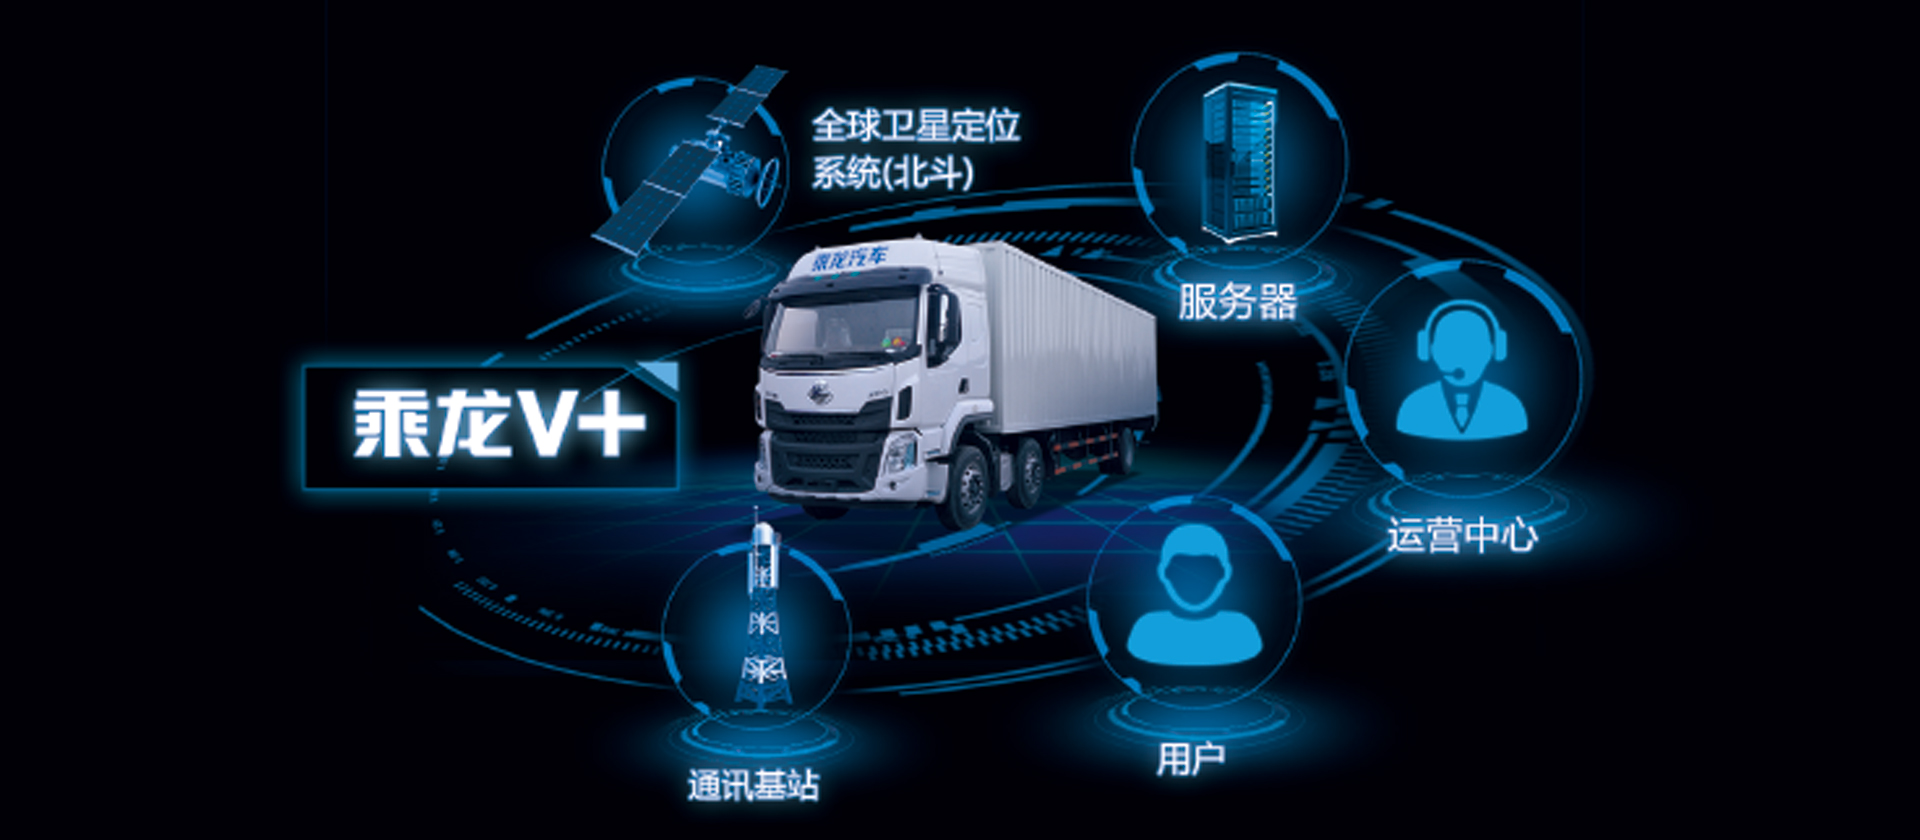 H5牽引車 全新開發乘龍V+車聯網系統，智能卡車，十大功能幫助改善駕駛行為50%，降低車輛7%-10%油耗，提升20%出勤率和配貨率